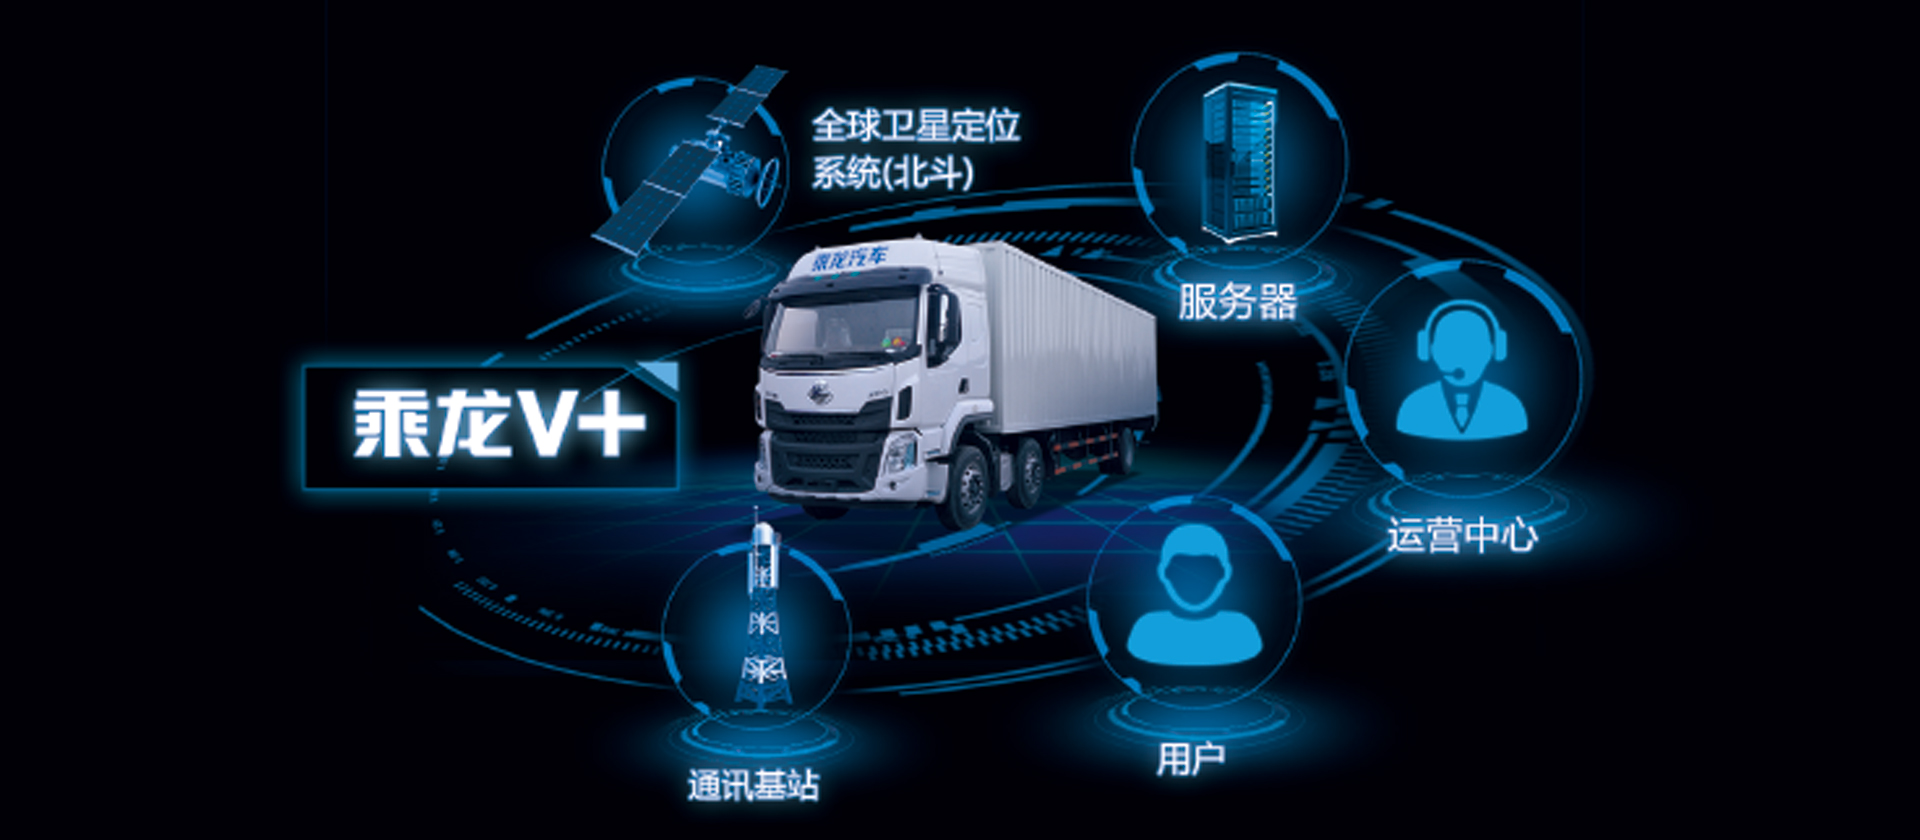 H5牽引車 全新開發乘龍V+車聯網系統，智能卡車，十大功能幫助改善駕駛行為50%，降低車輛7%-10%油耗，提升20%出勤率和配貨率